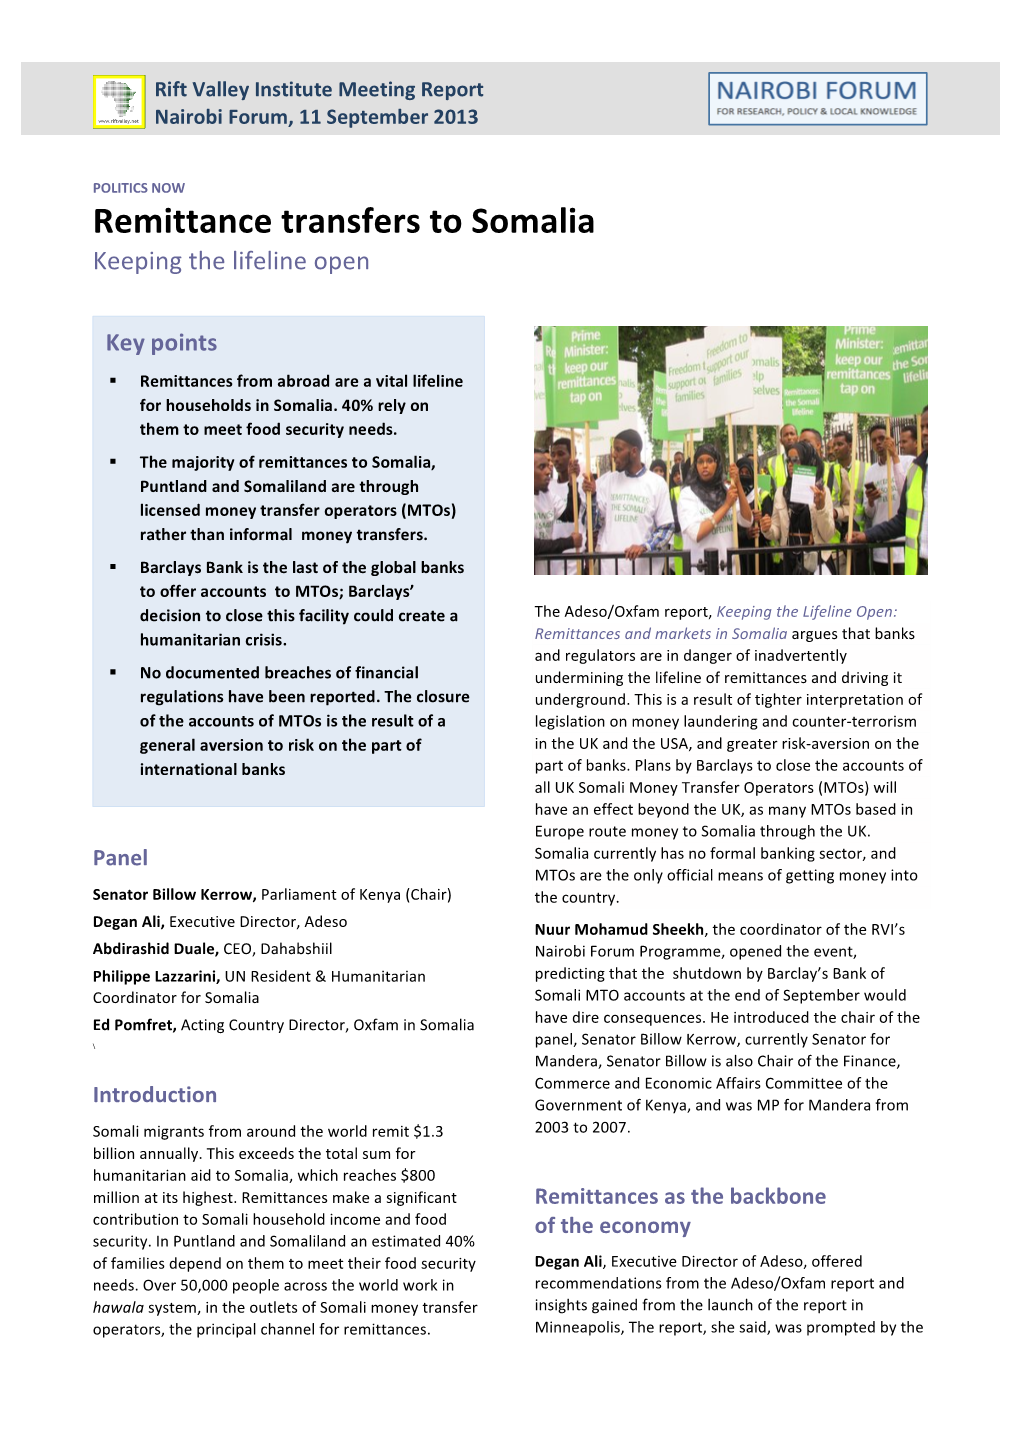 Remittance Transfers to Somalia Keeping the Lifeline Open